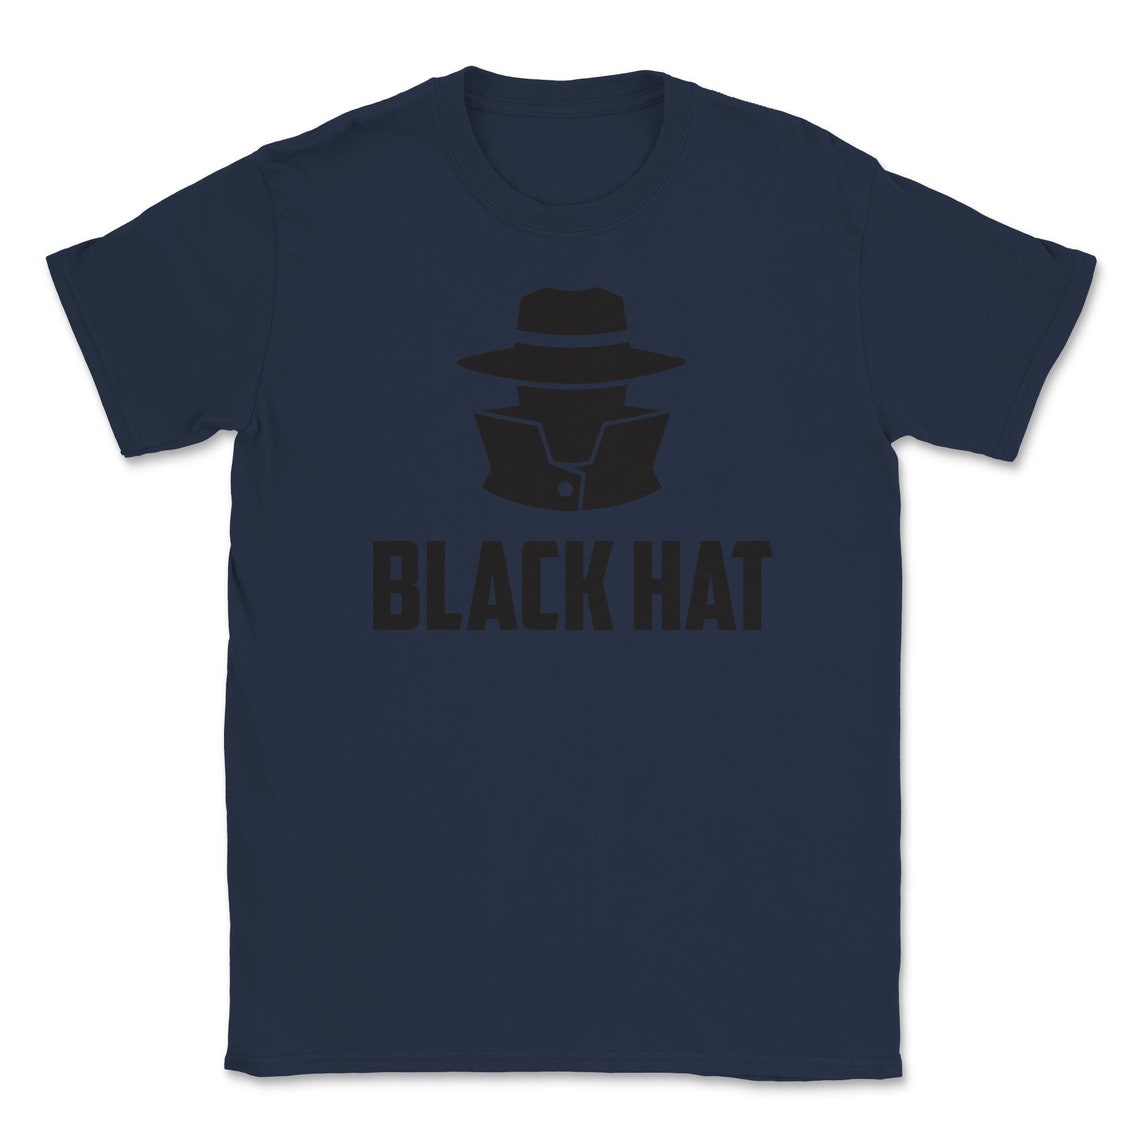 Black hat coding and hacking design | Etsy